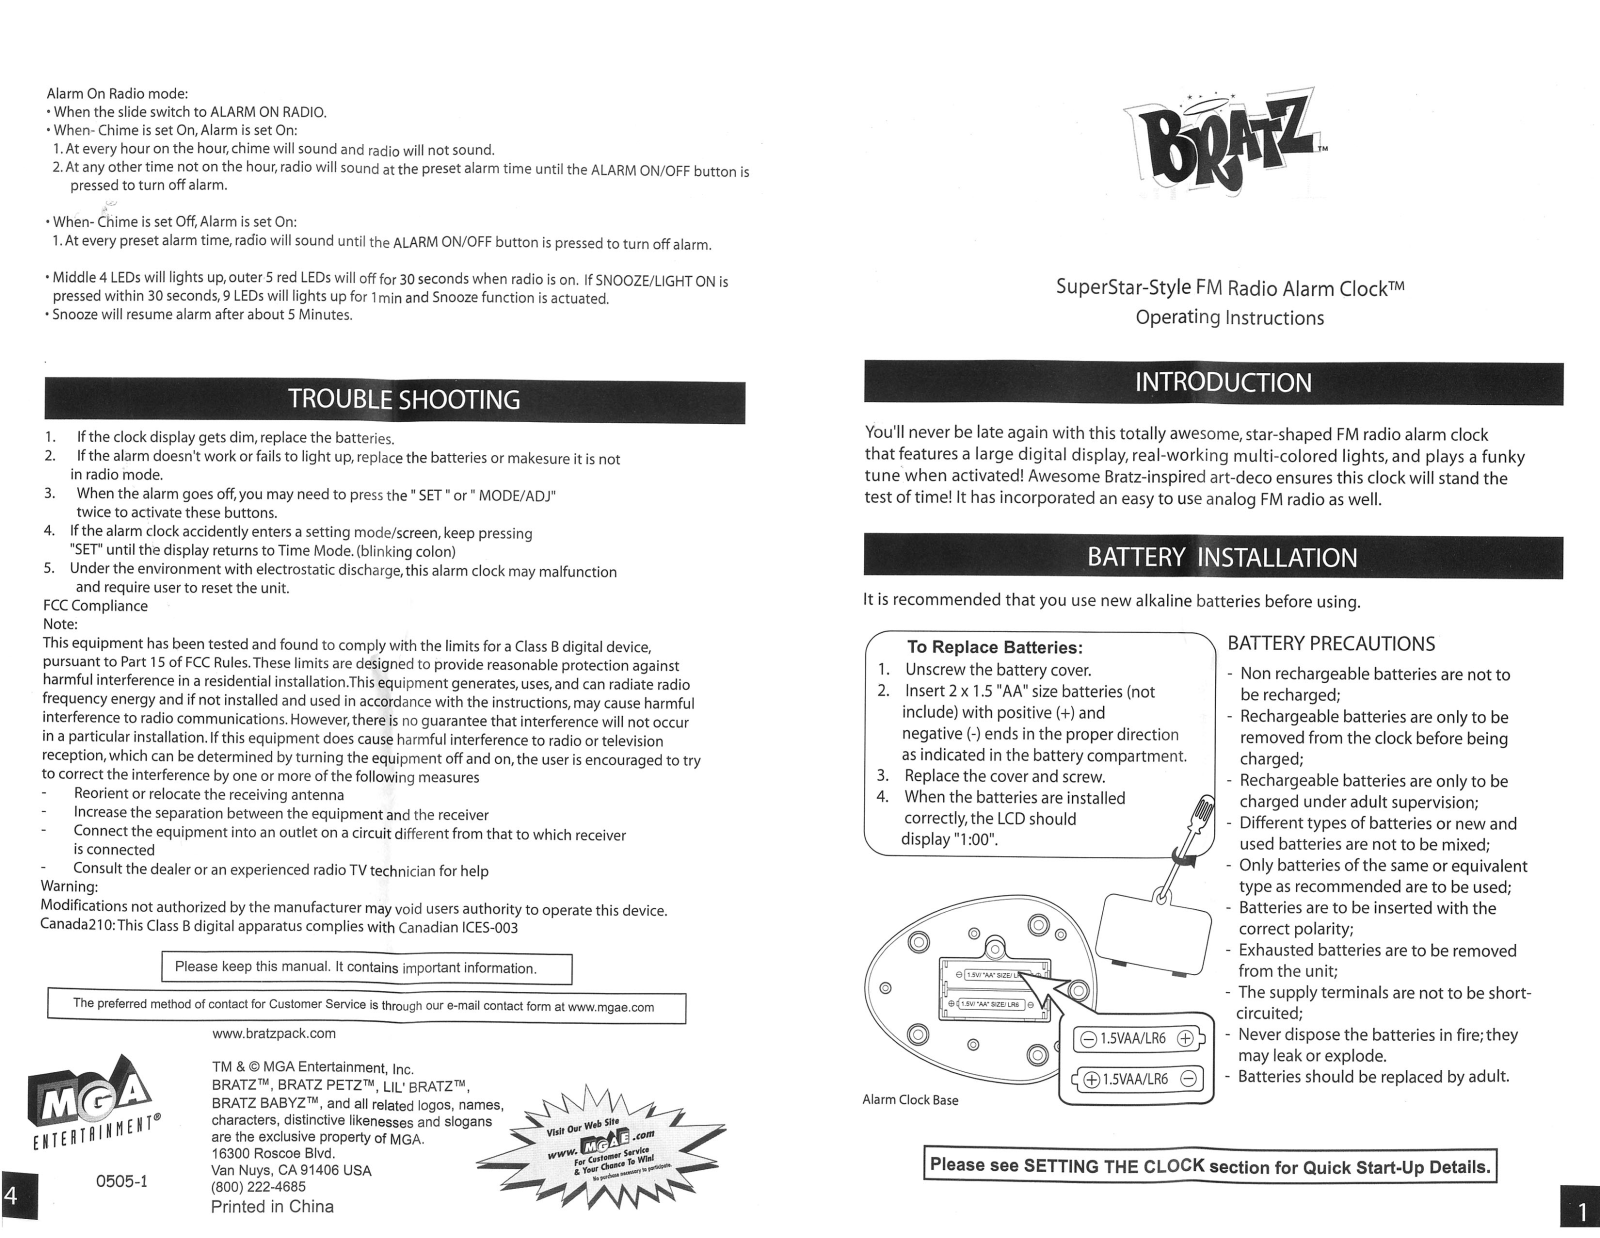 Mga Entertainment BRATZ SUPERSTAR-STYLE FM RADIO ALARM CLOCK 1 4 User Manual